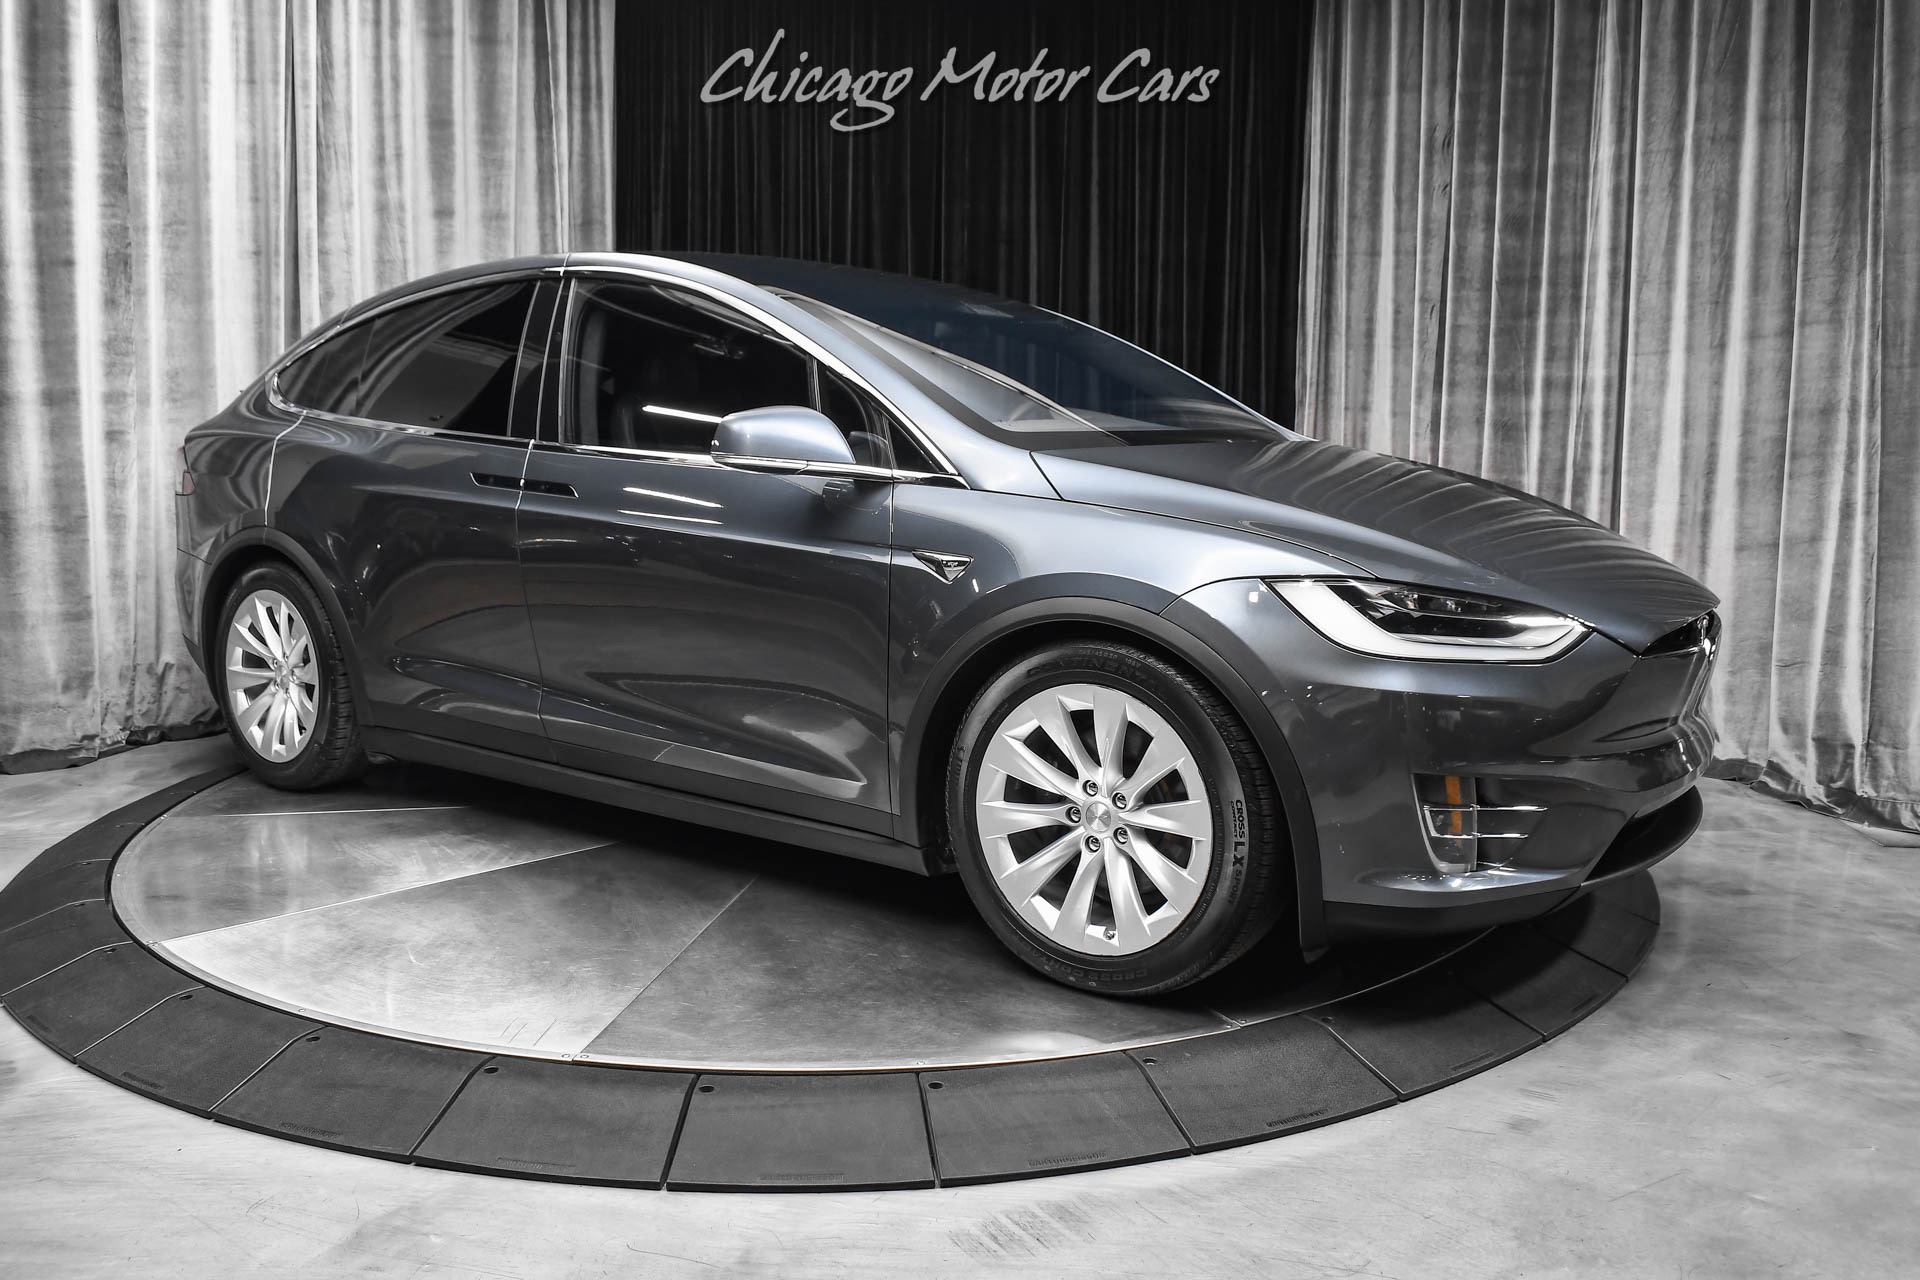 Used-2020-Tesla-Model-X-Long-Range-Plus-SUV-FULL-SELF-DRIVING-Premium-Upgrade-Pkg-5-Seat-Config